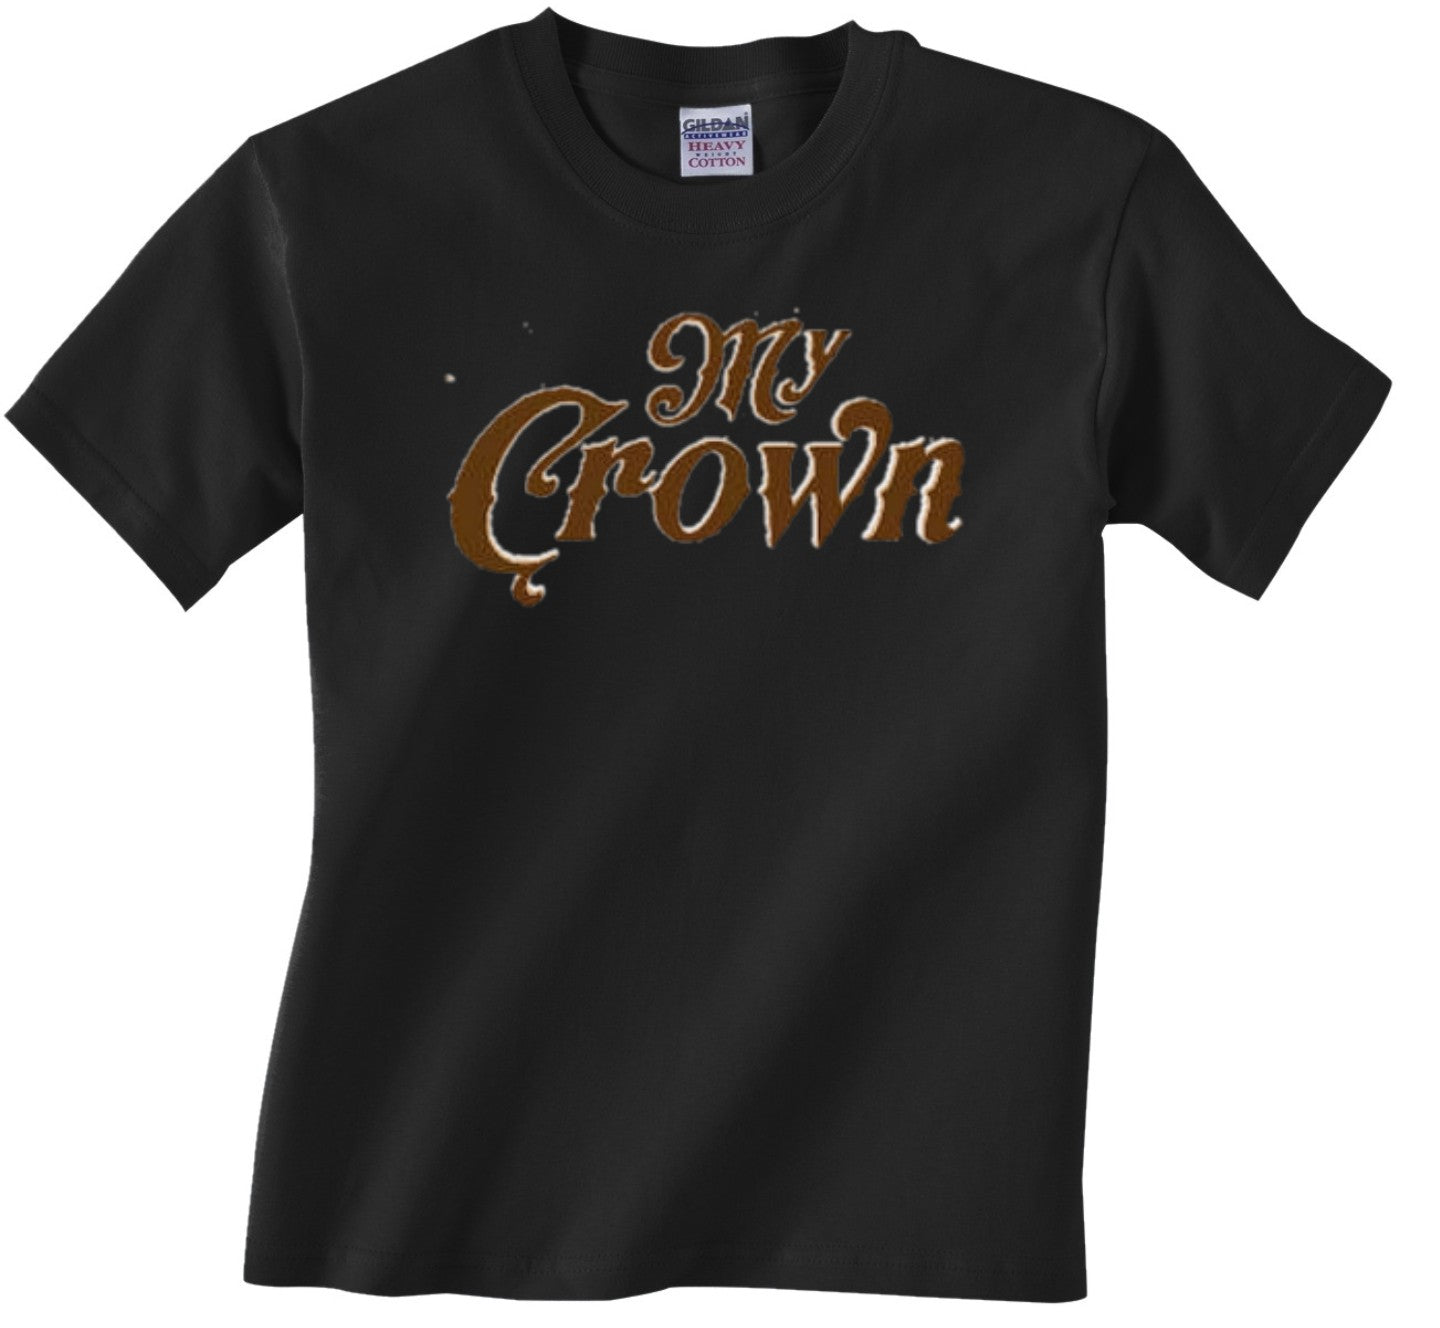 My Crown T-Shirt